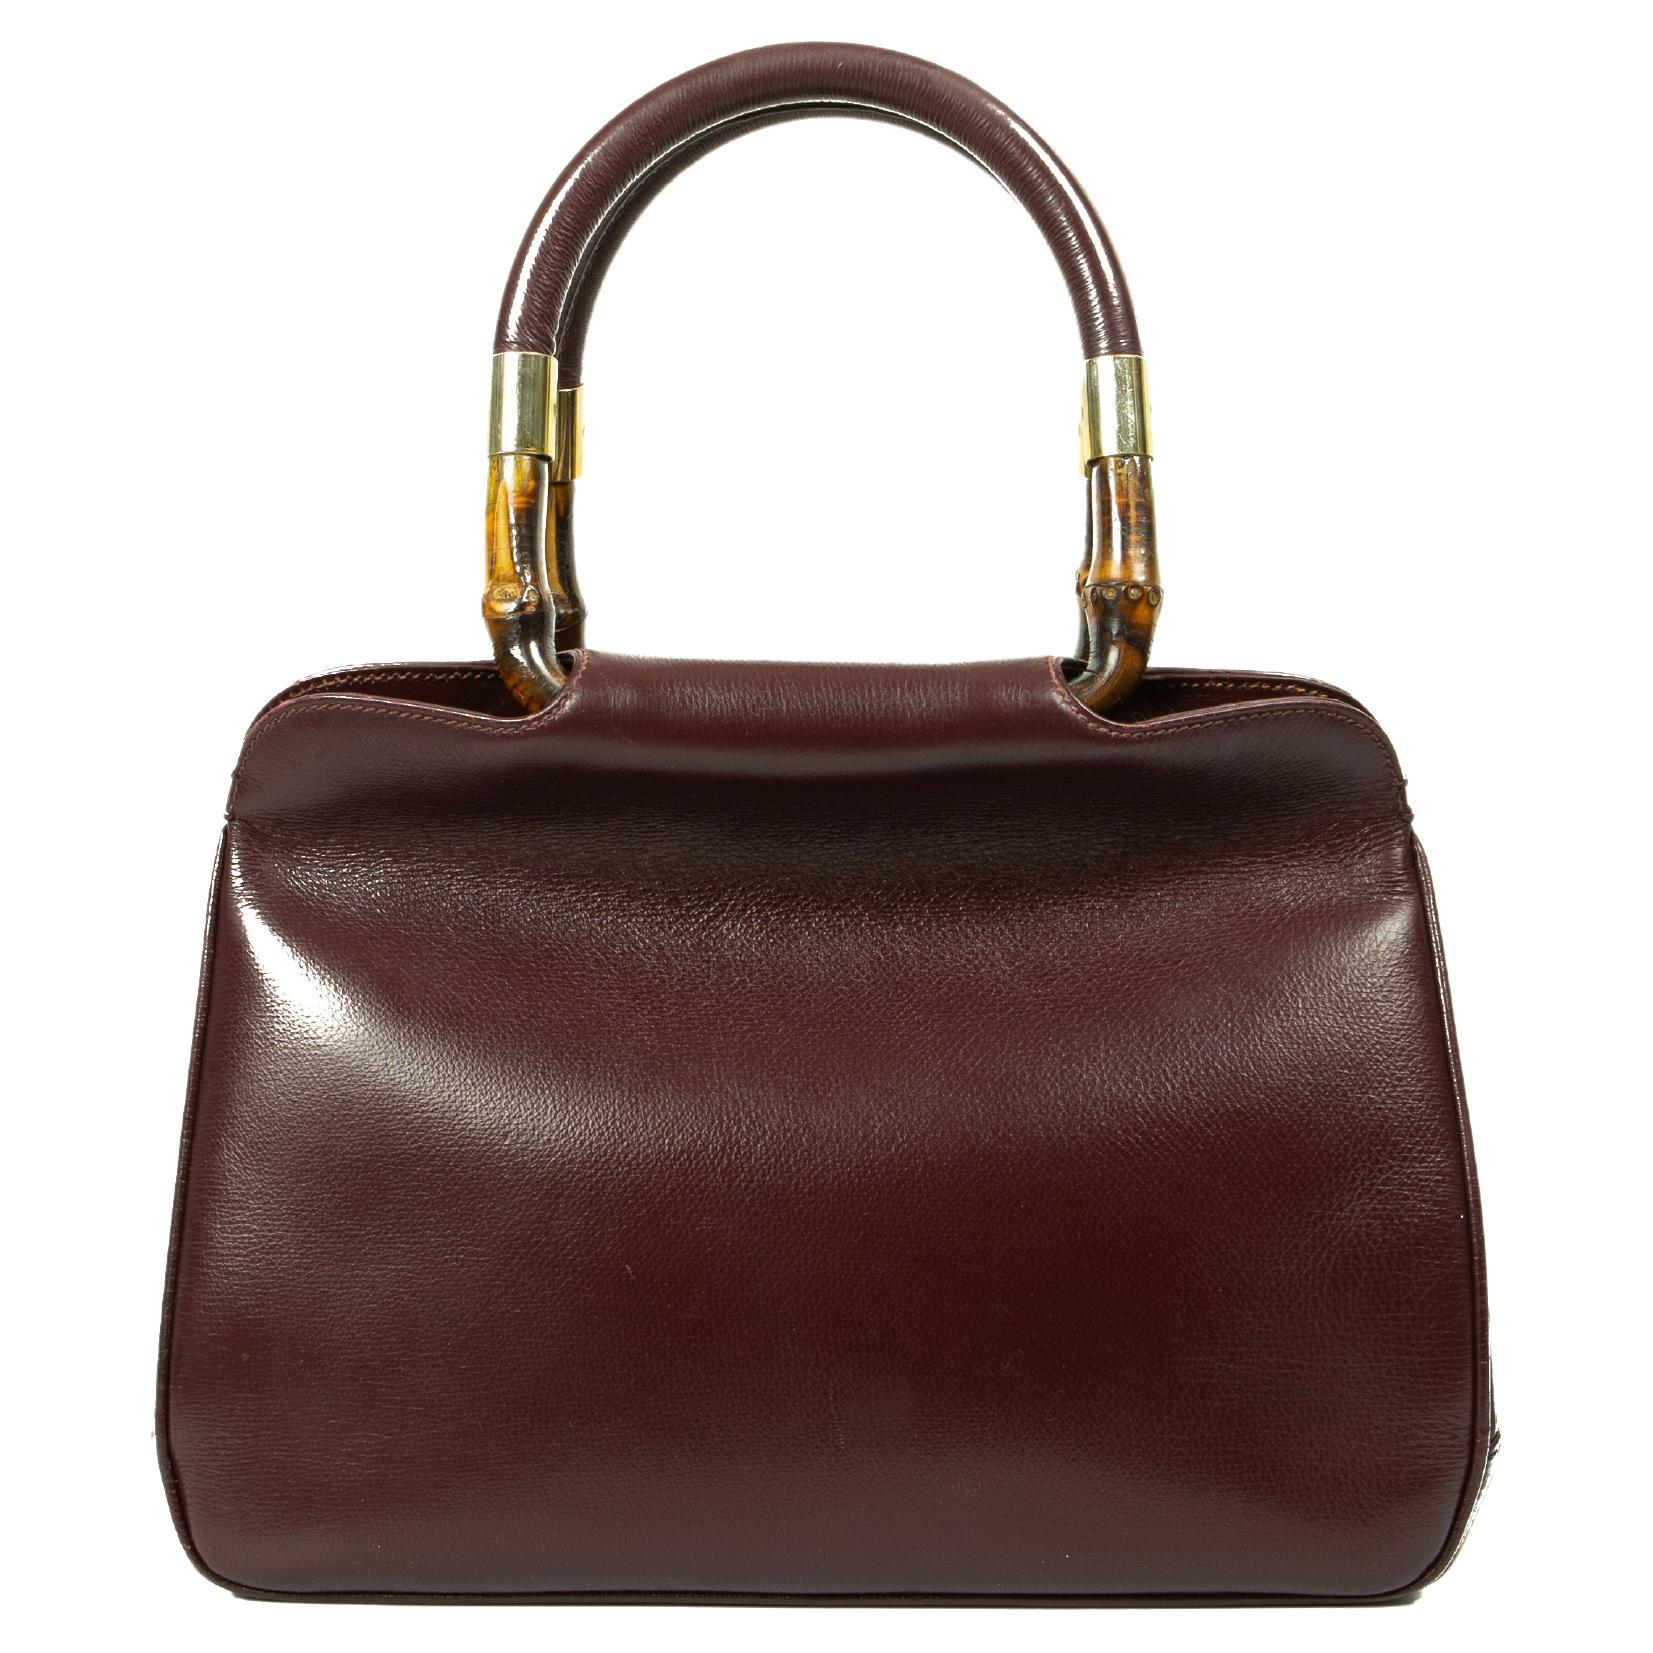 1970s Gucci Oxblood Leather Handbag